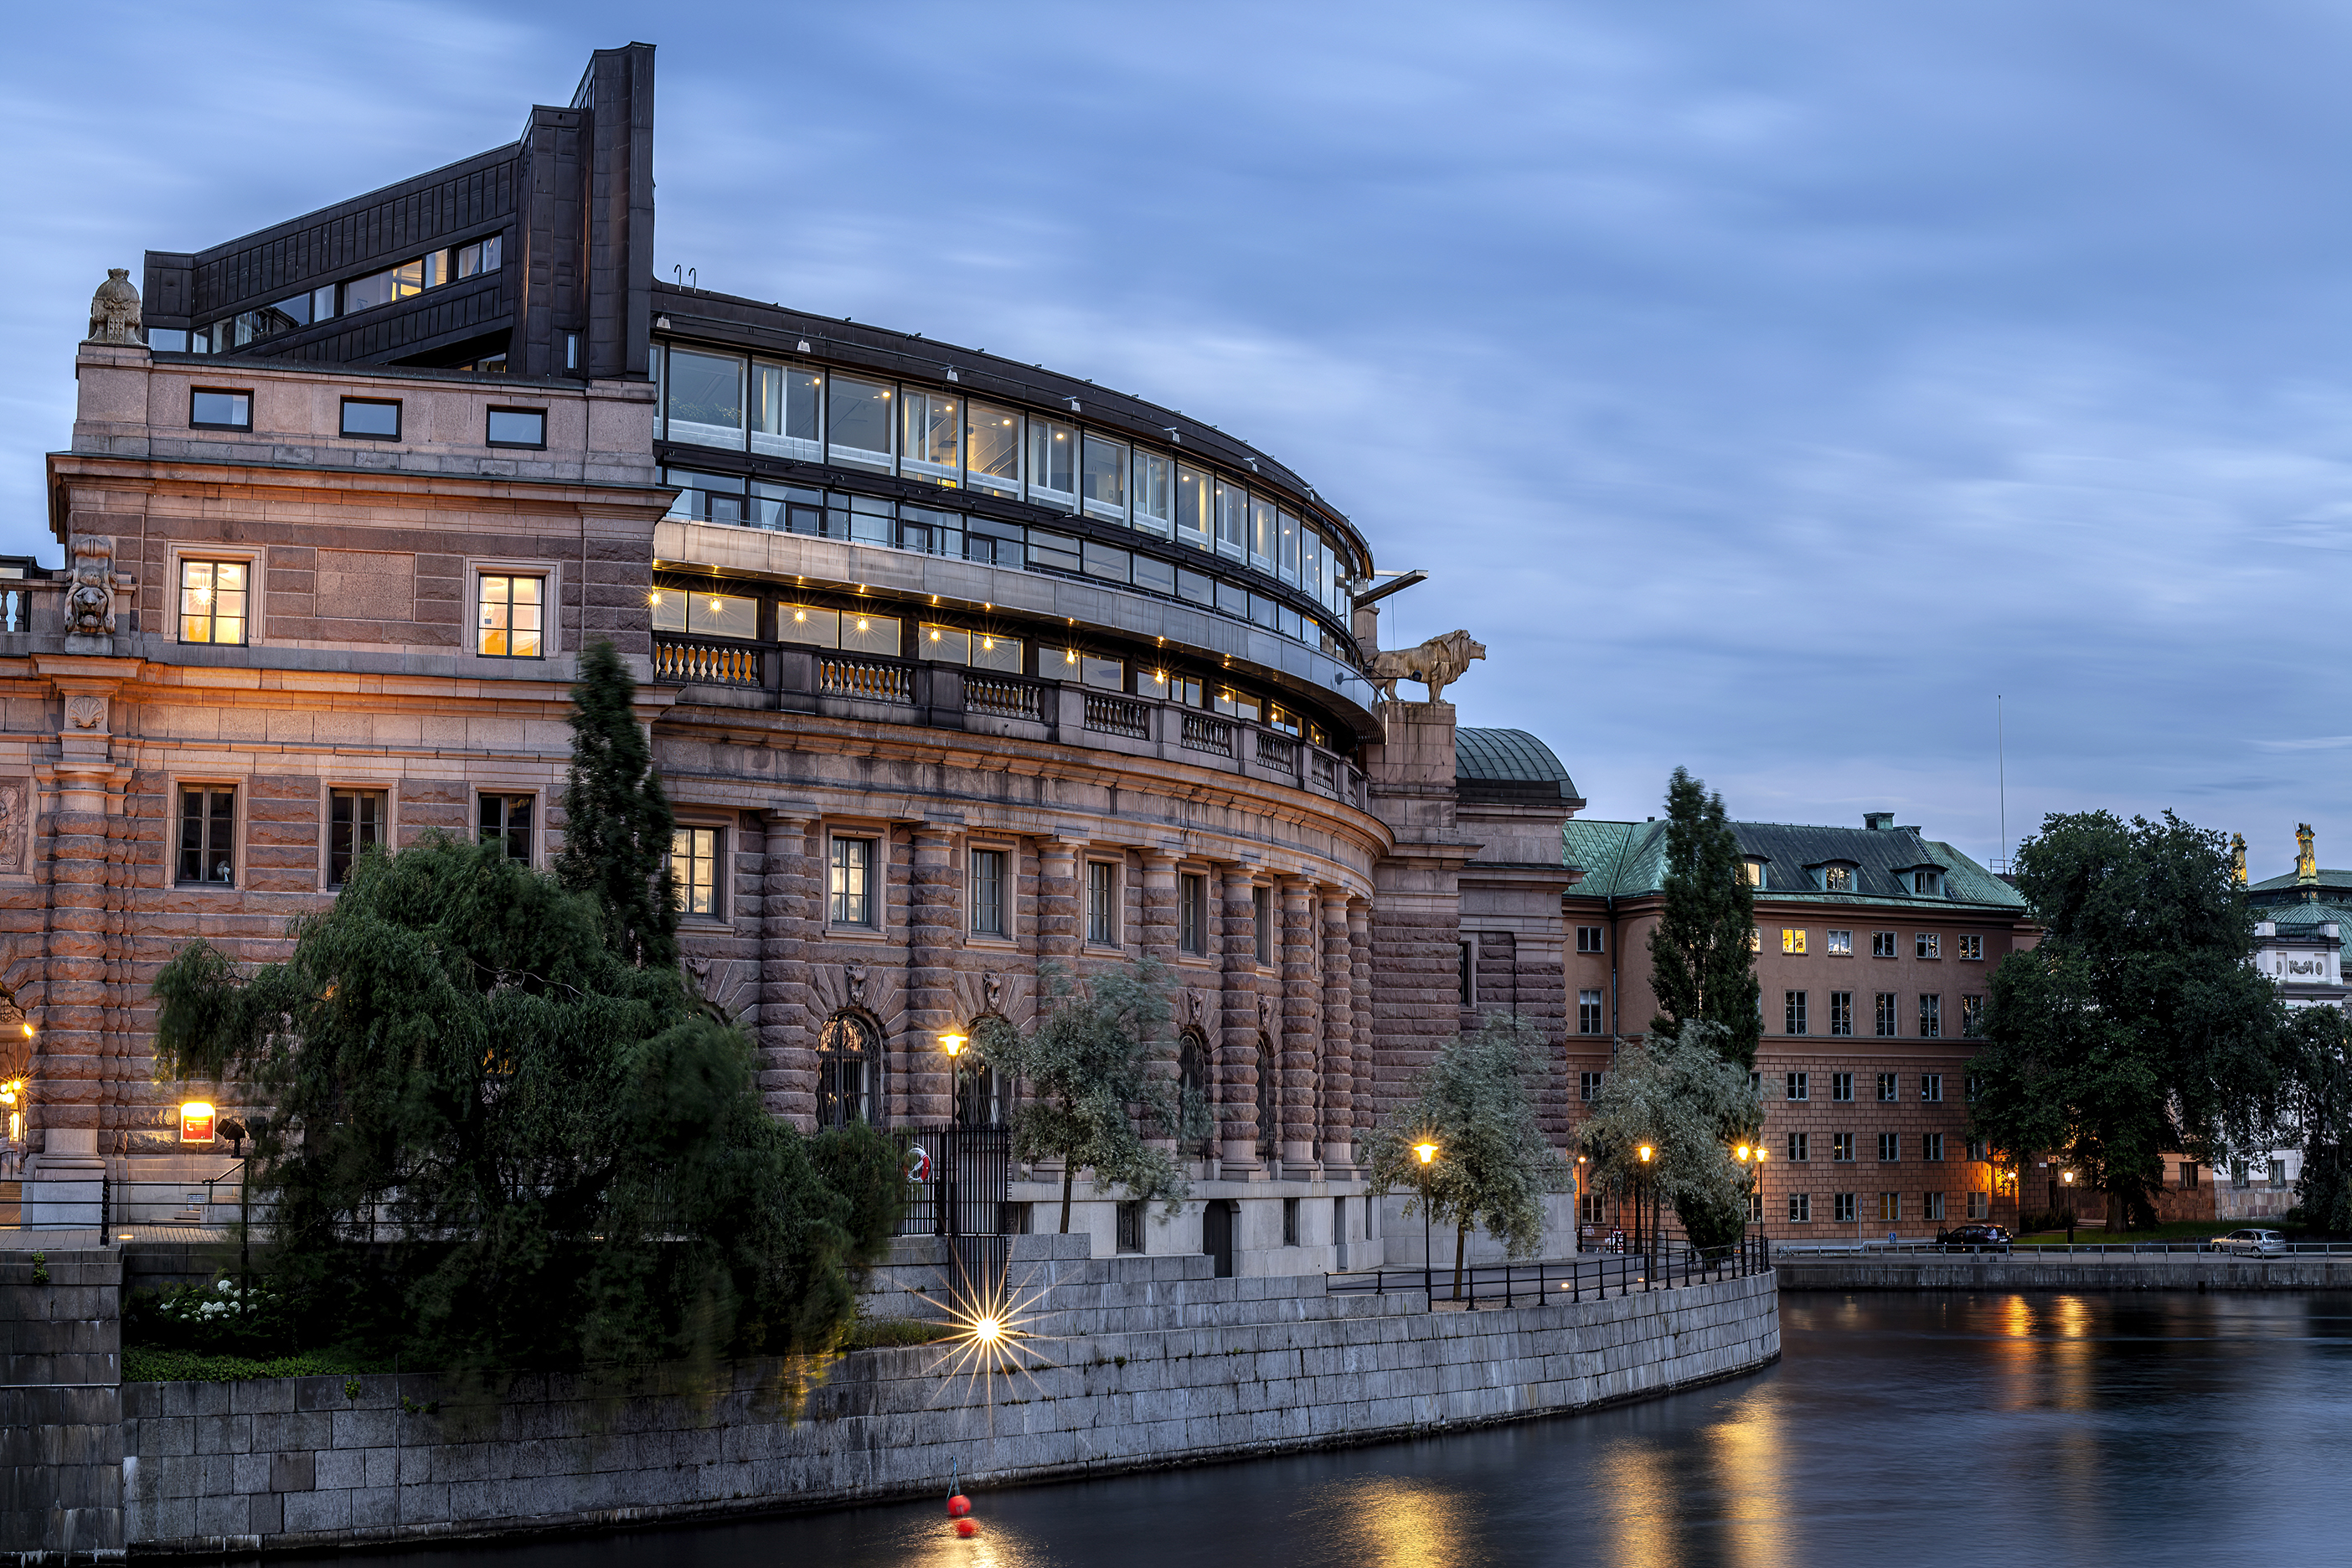 Twilight cityscapes photo Sweden Parliment House Riksgatan 1 Stockholm July 2012 01